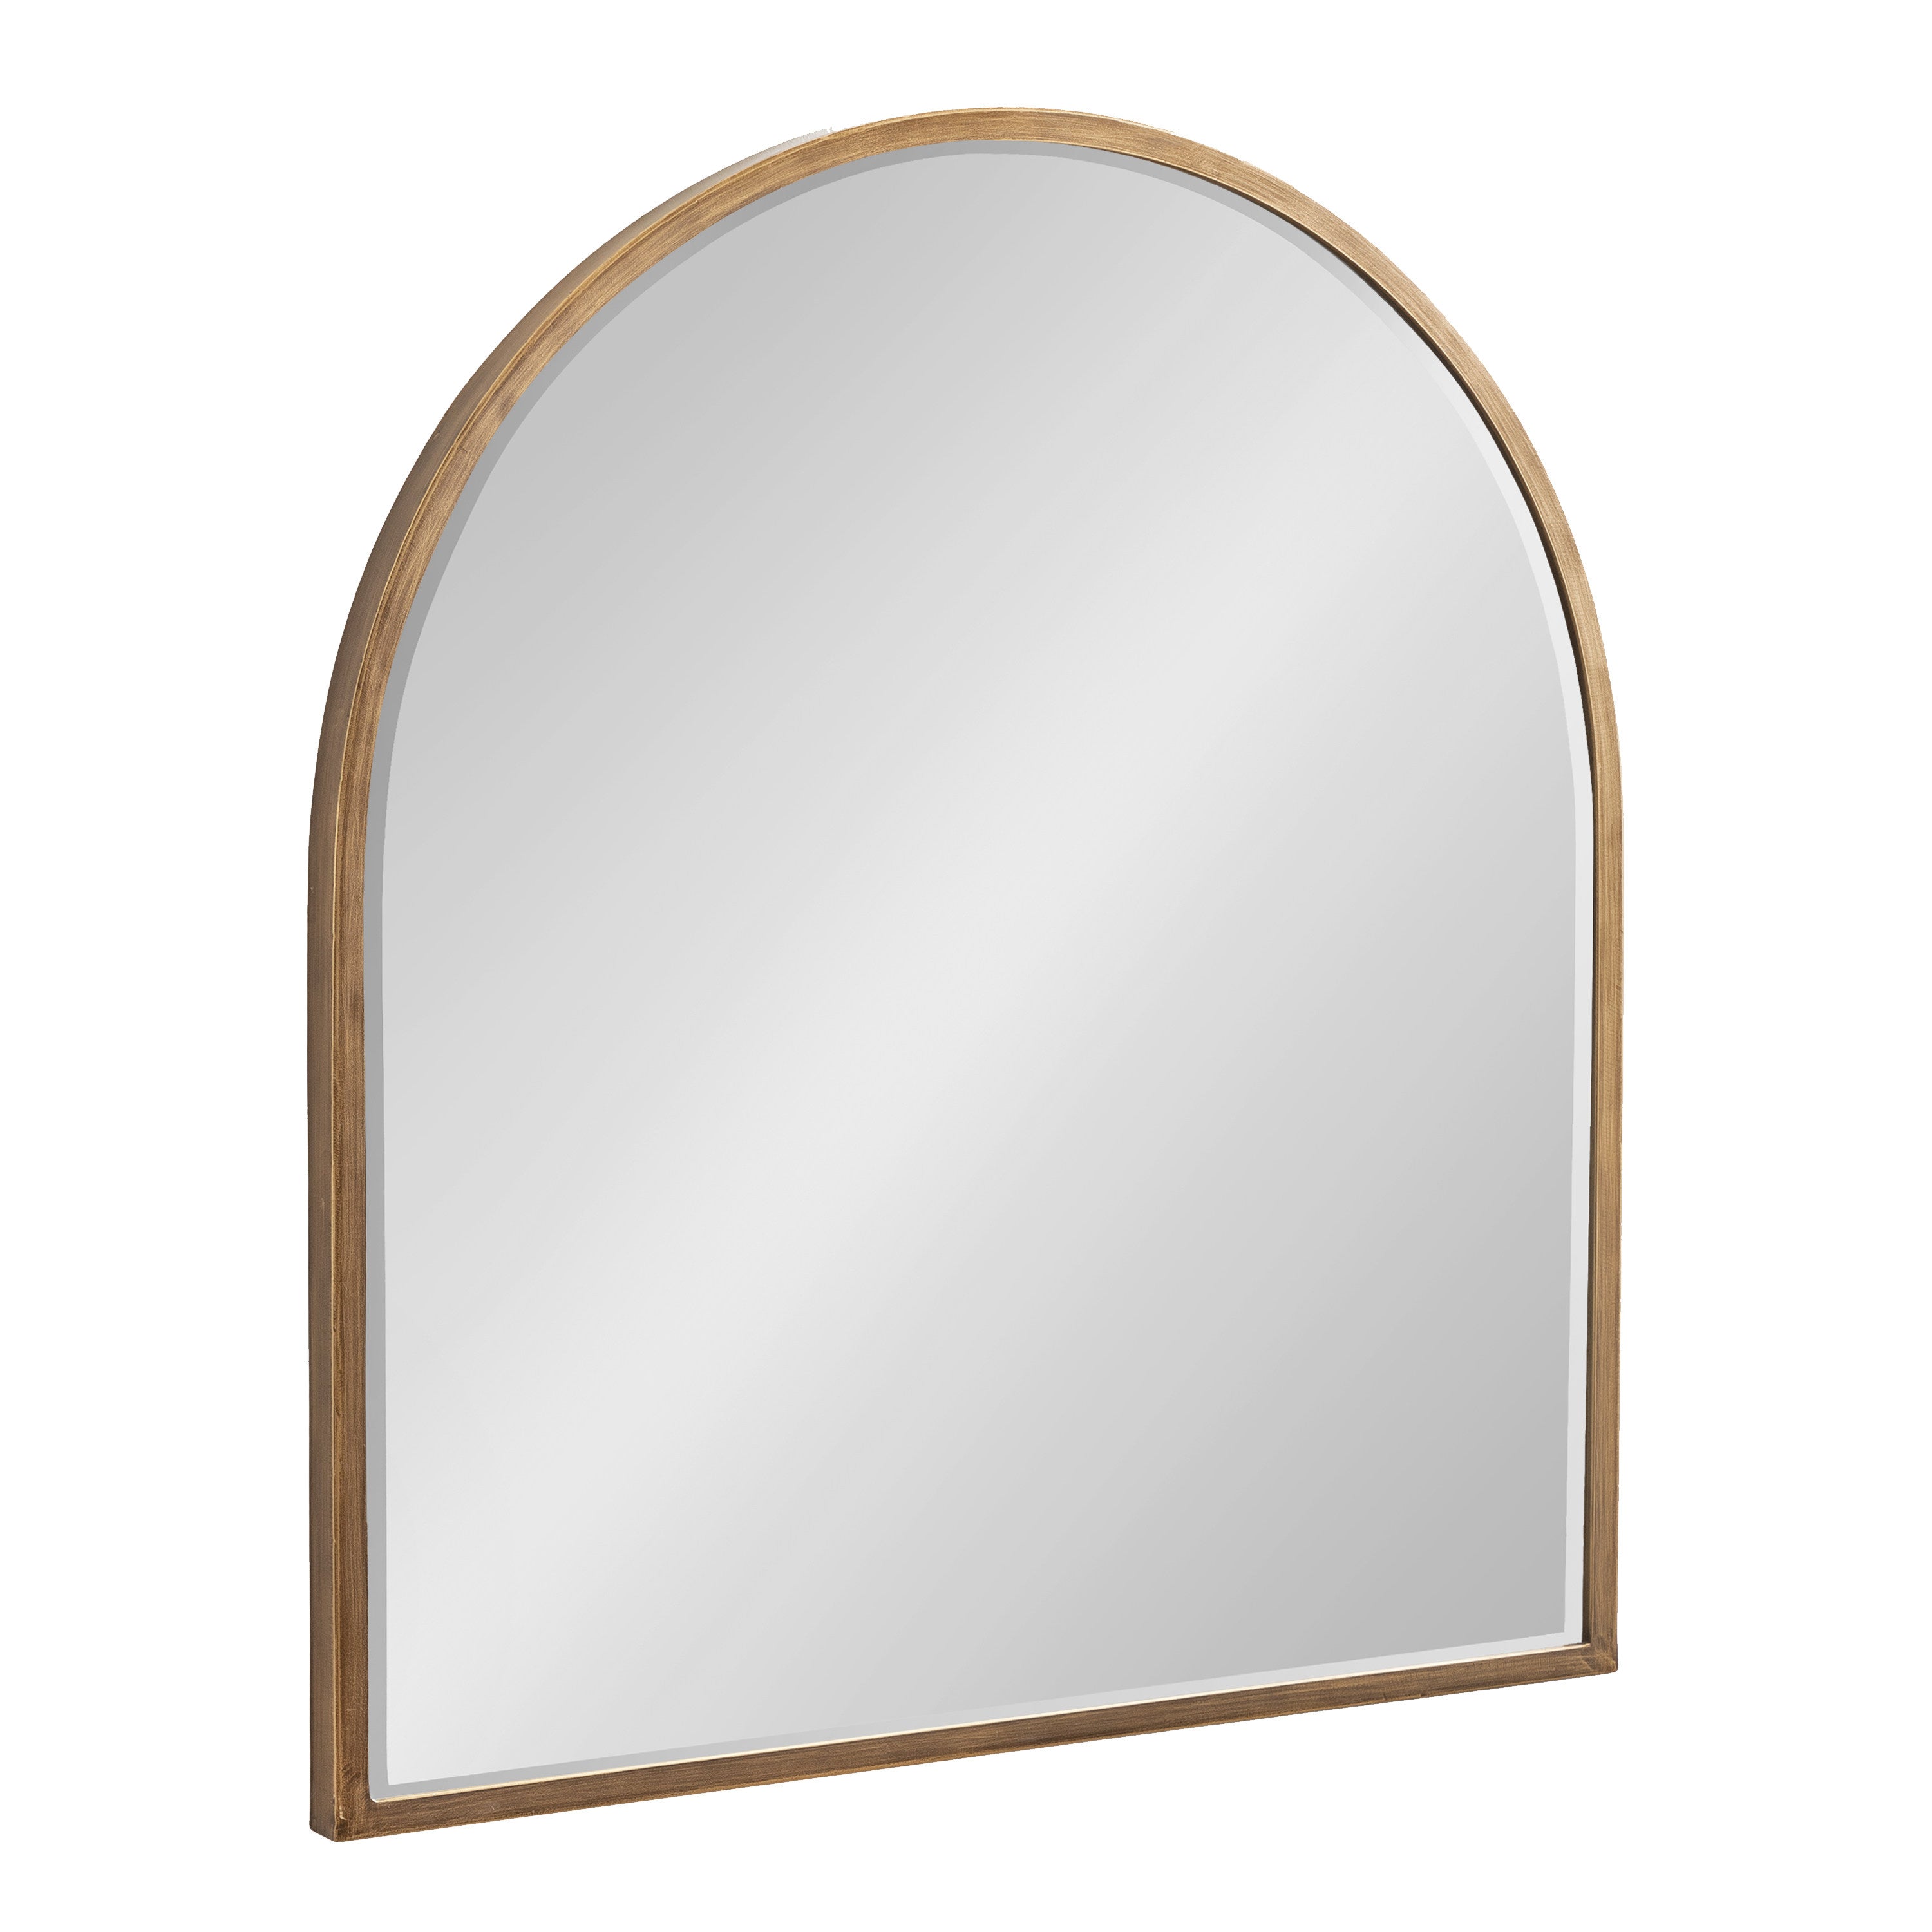 McLean Arch Metal Framed Wall Mirror